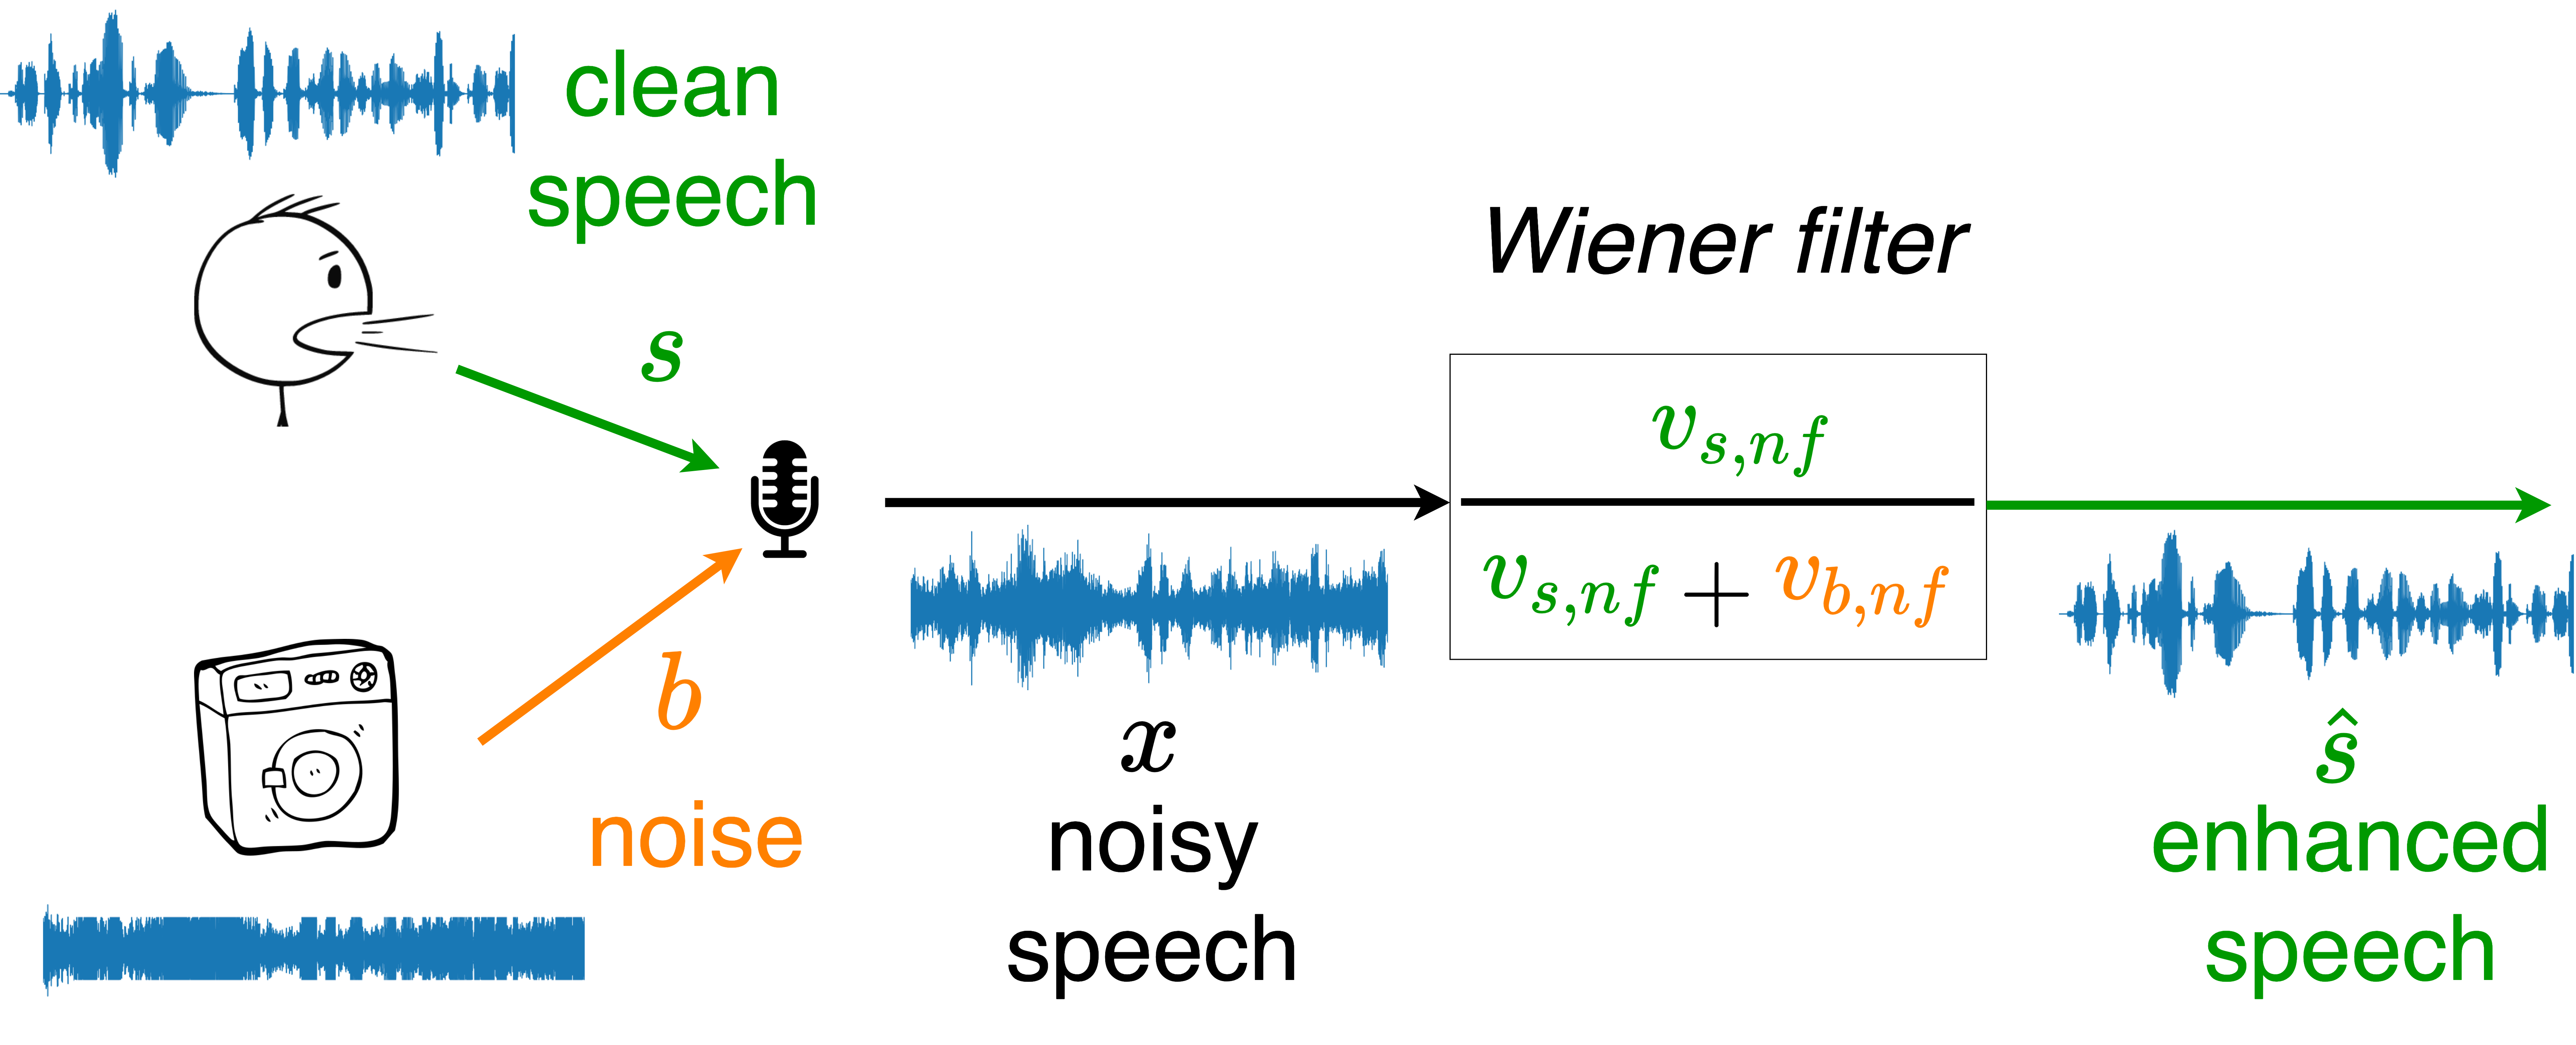 Figure 2: The figure shows the procedure of speech enhancement using Wiener filtering.